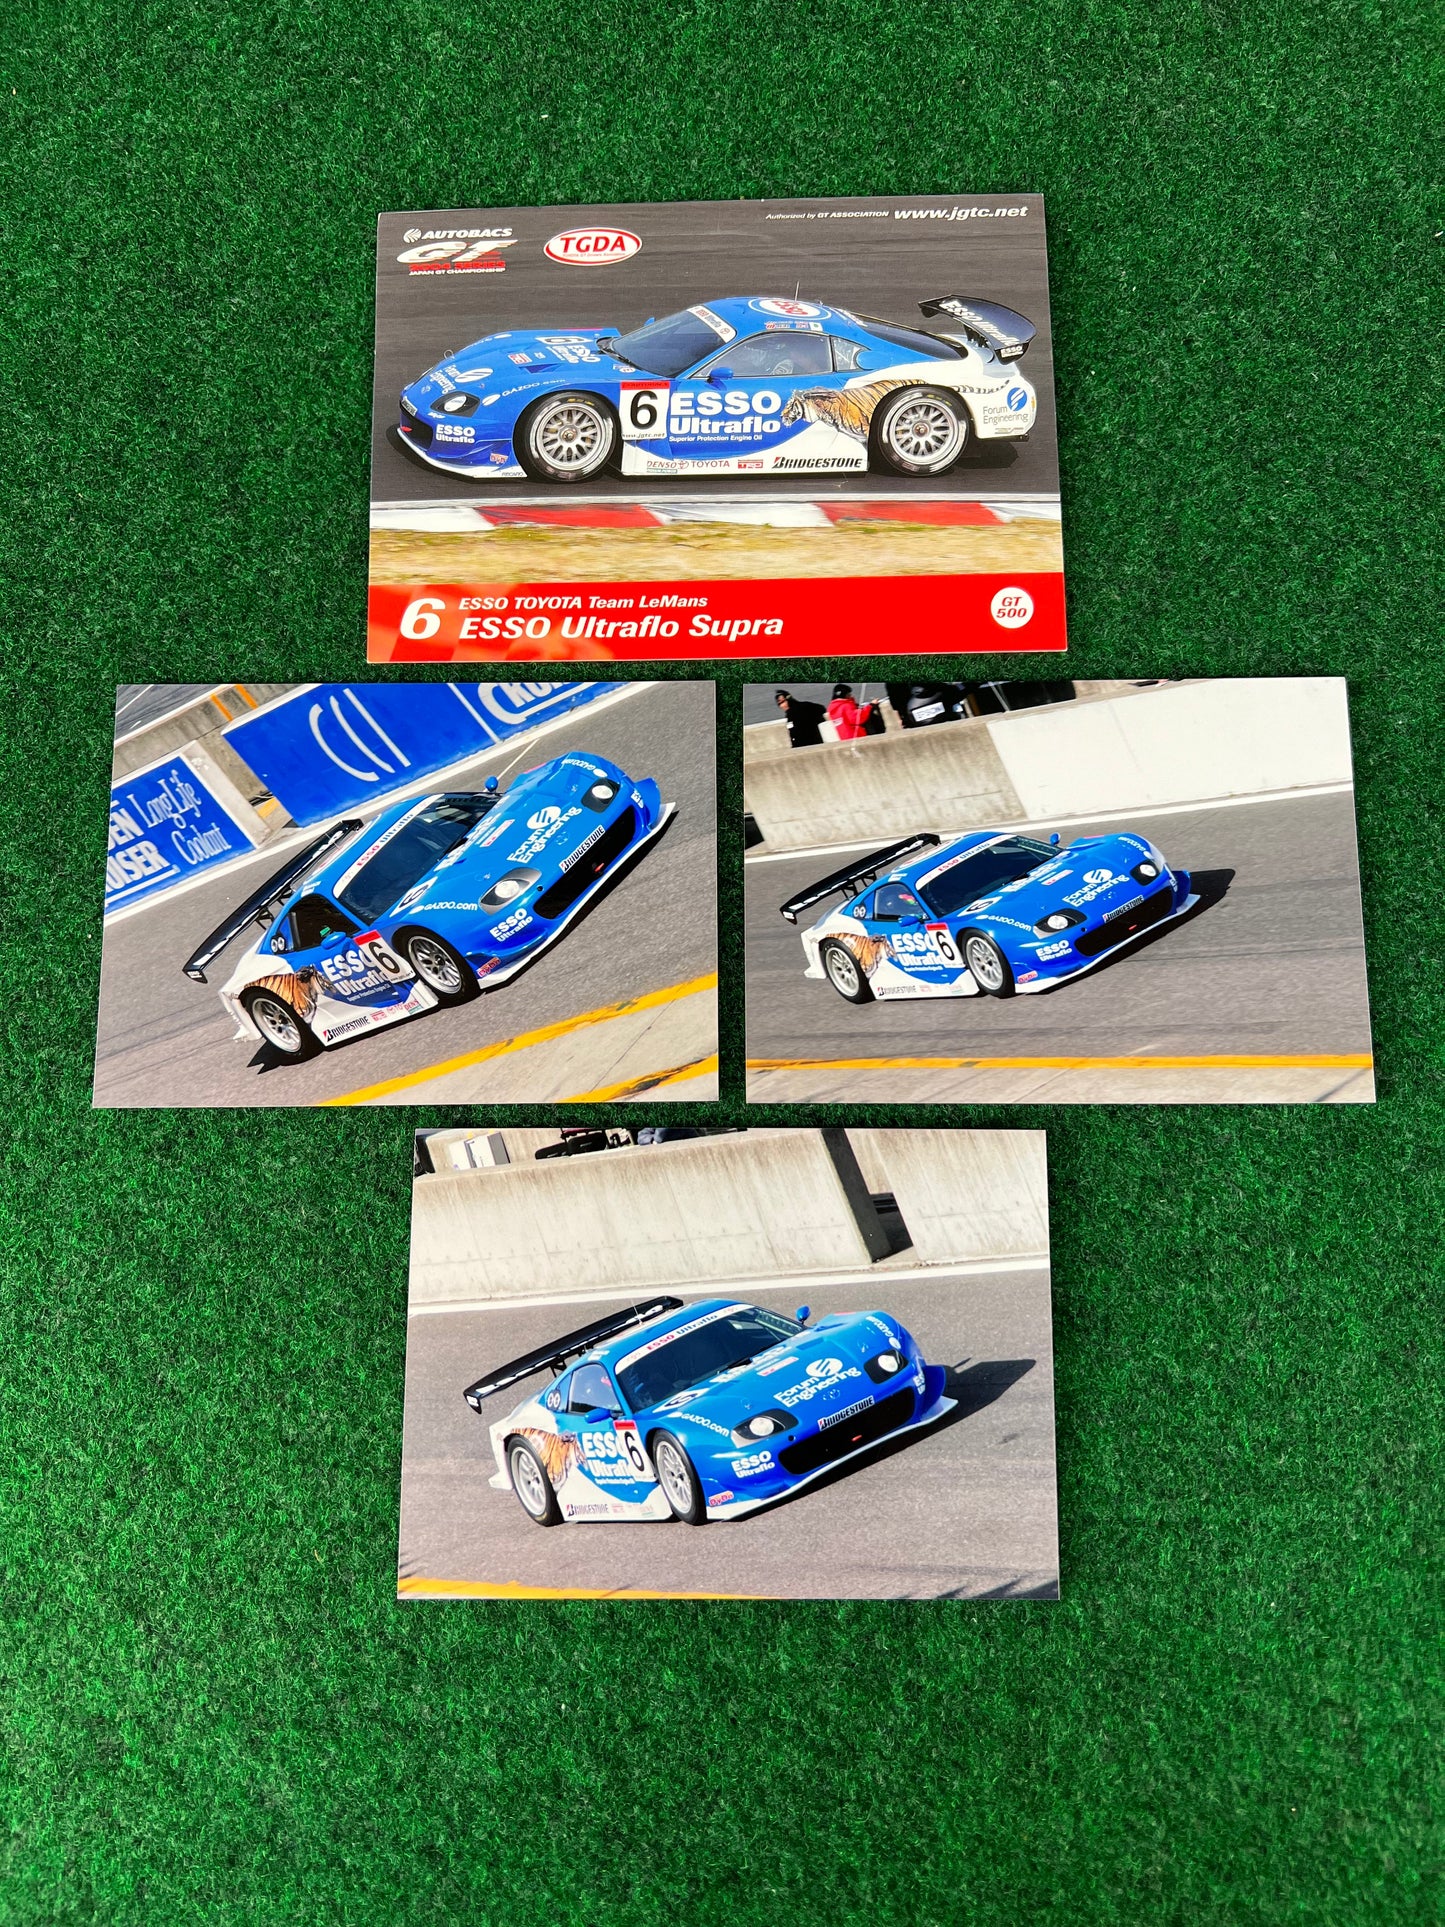 JGTC Toyota Supra - Car/Driver Cards, Test Session Photos & Sticker Sheets SET